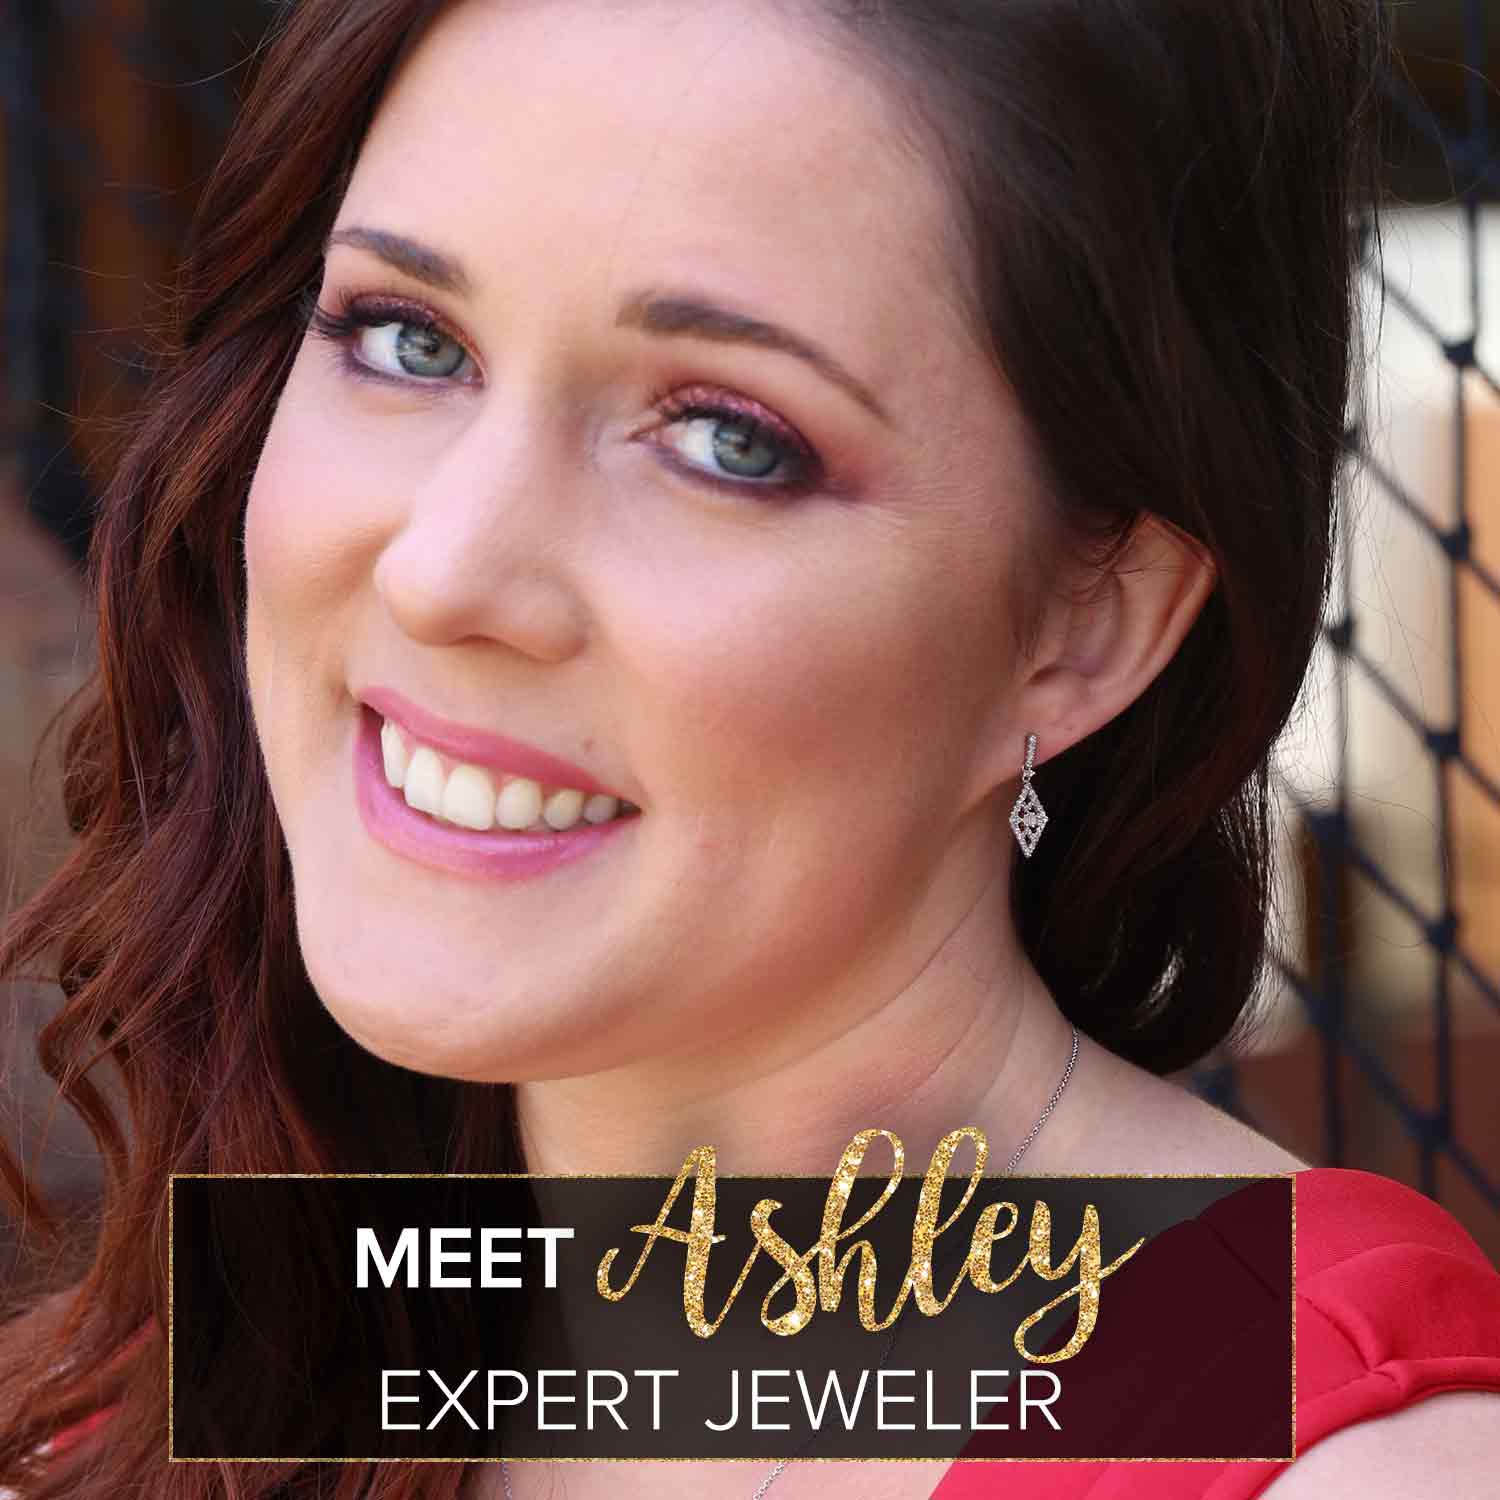 Jeweler Ashley from Steven Singer Jewelers